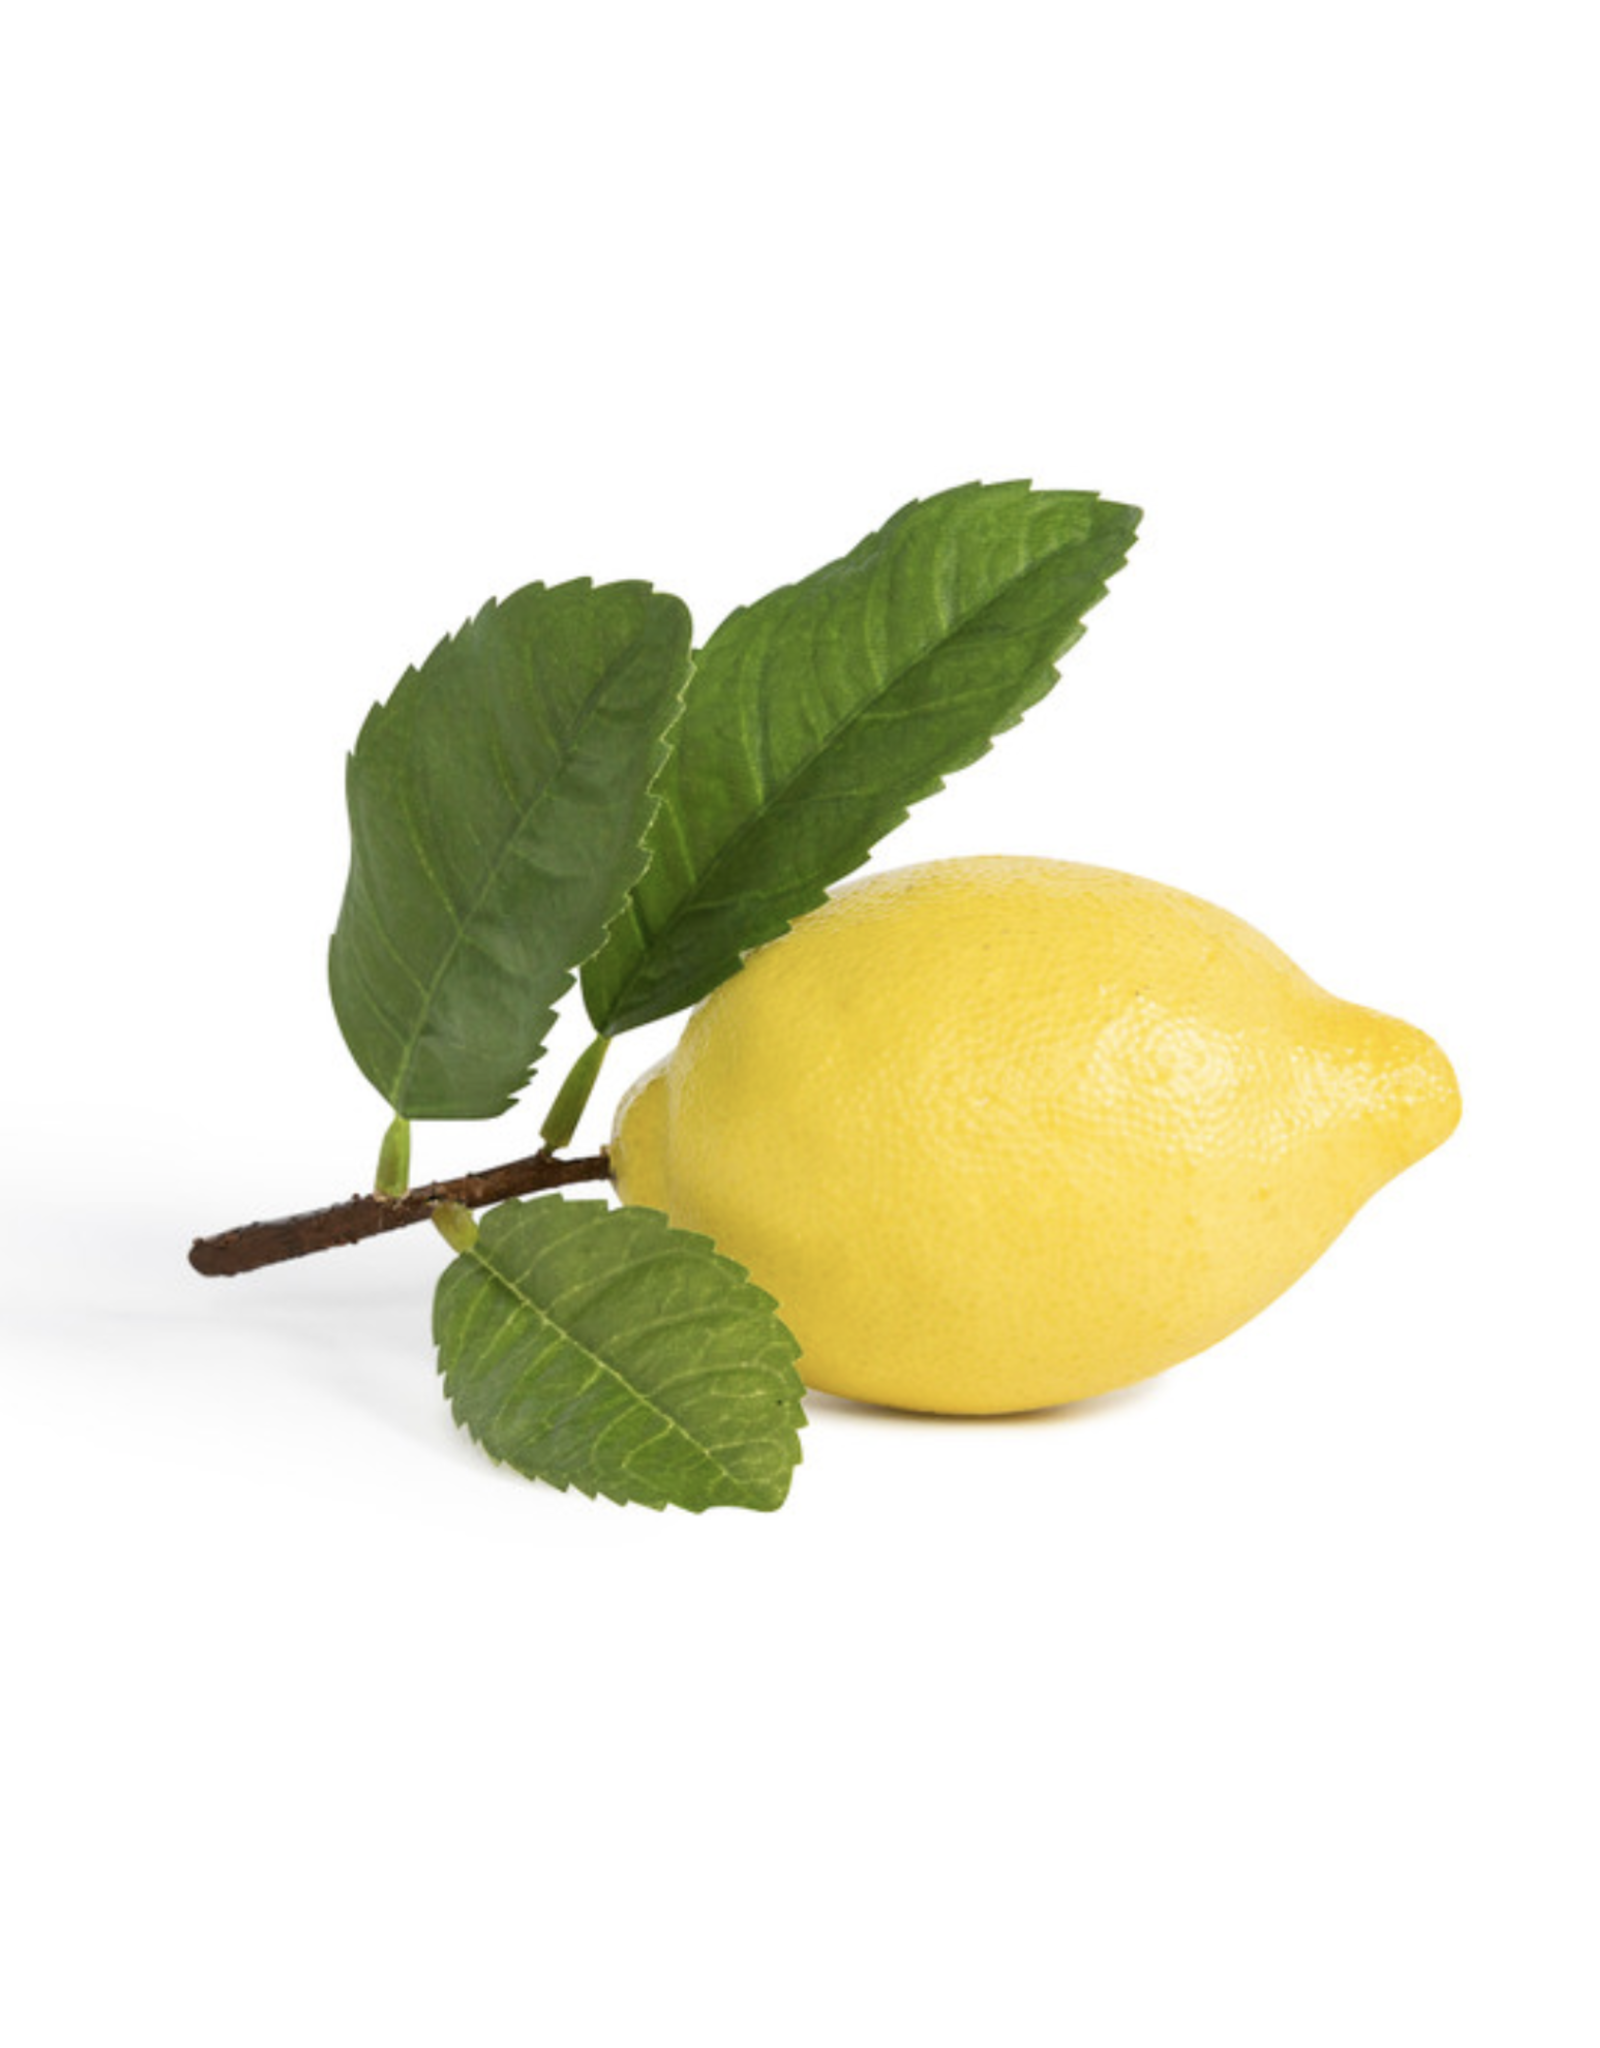 Park Hill Lemon with Leaf